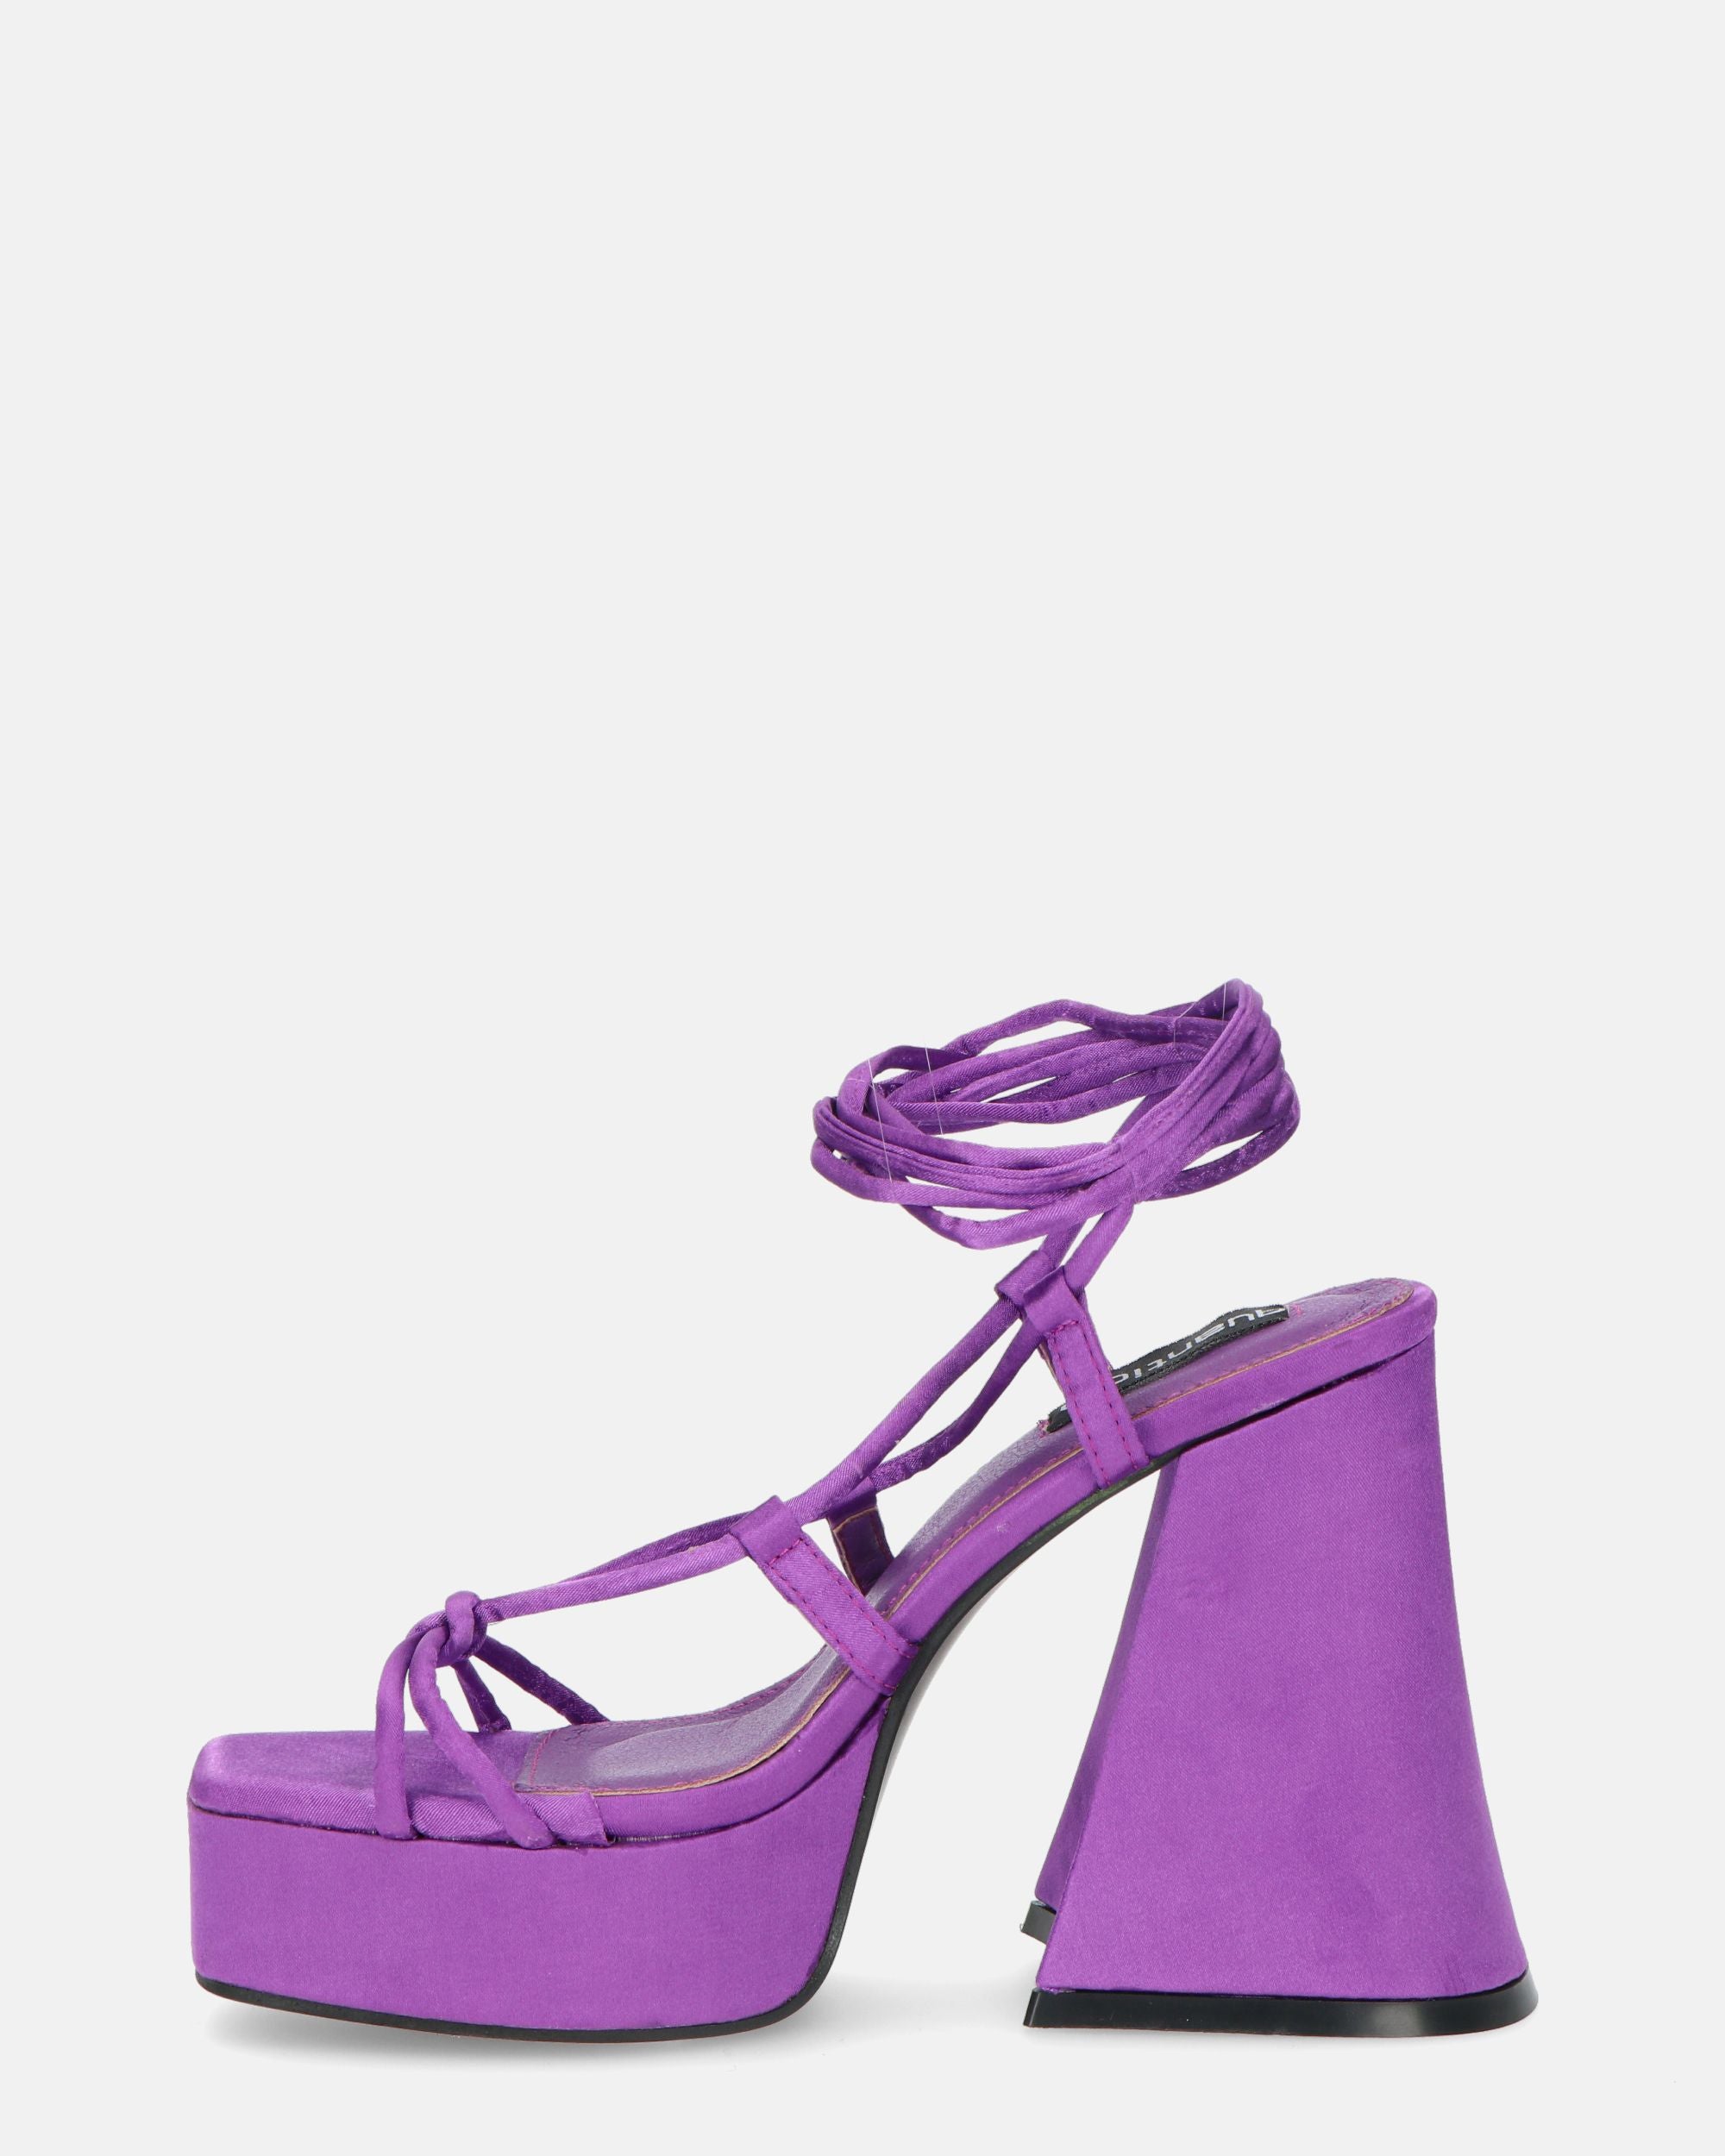 LORINA - purple lycra sandals with heel and platform